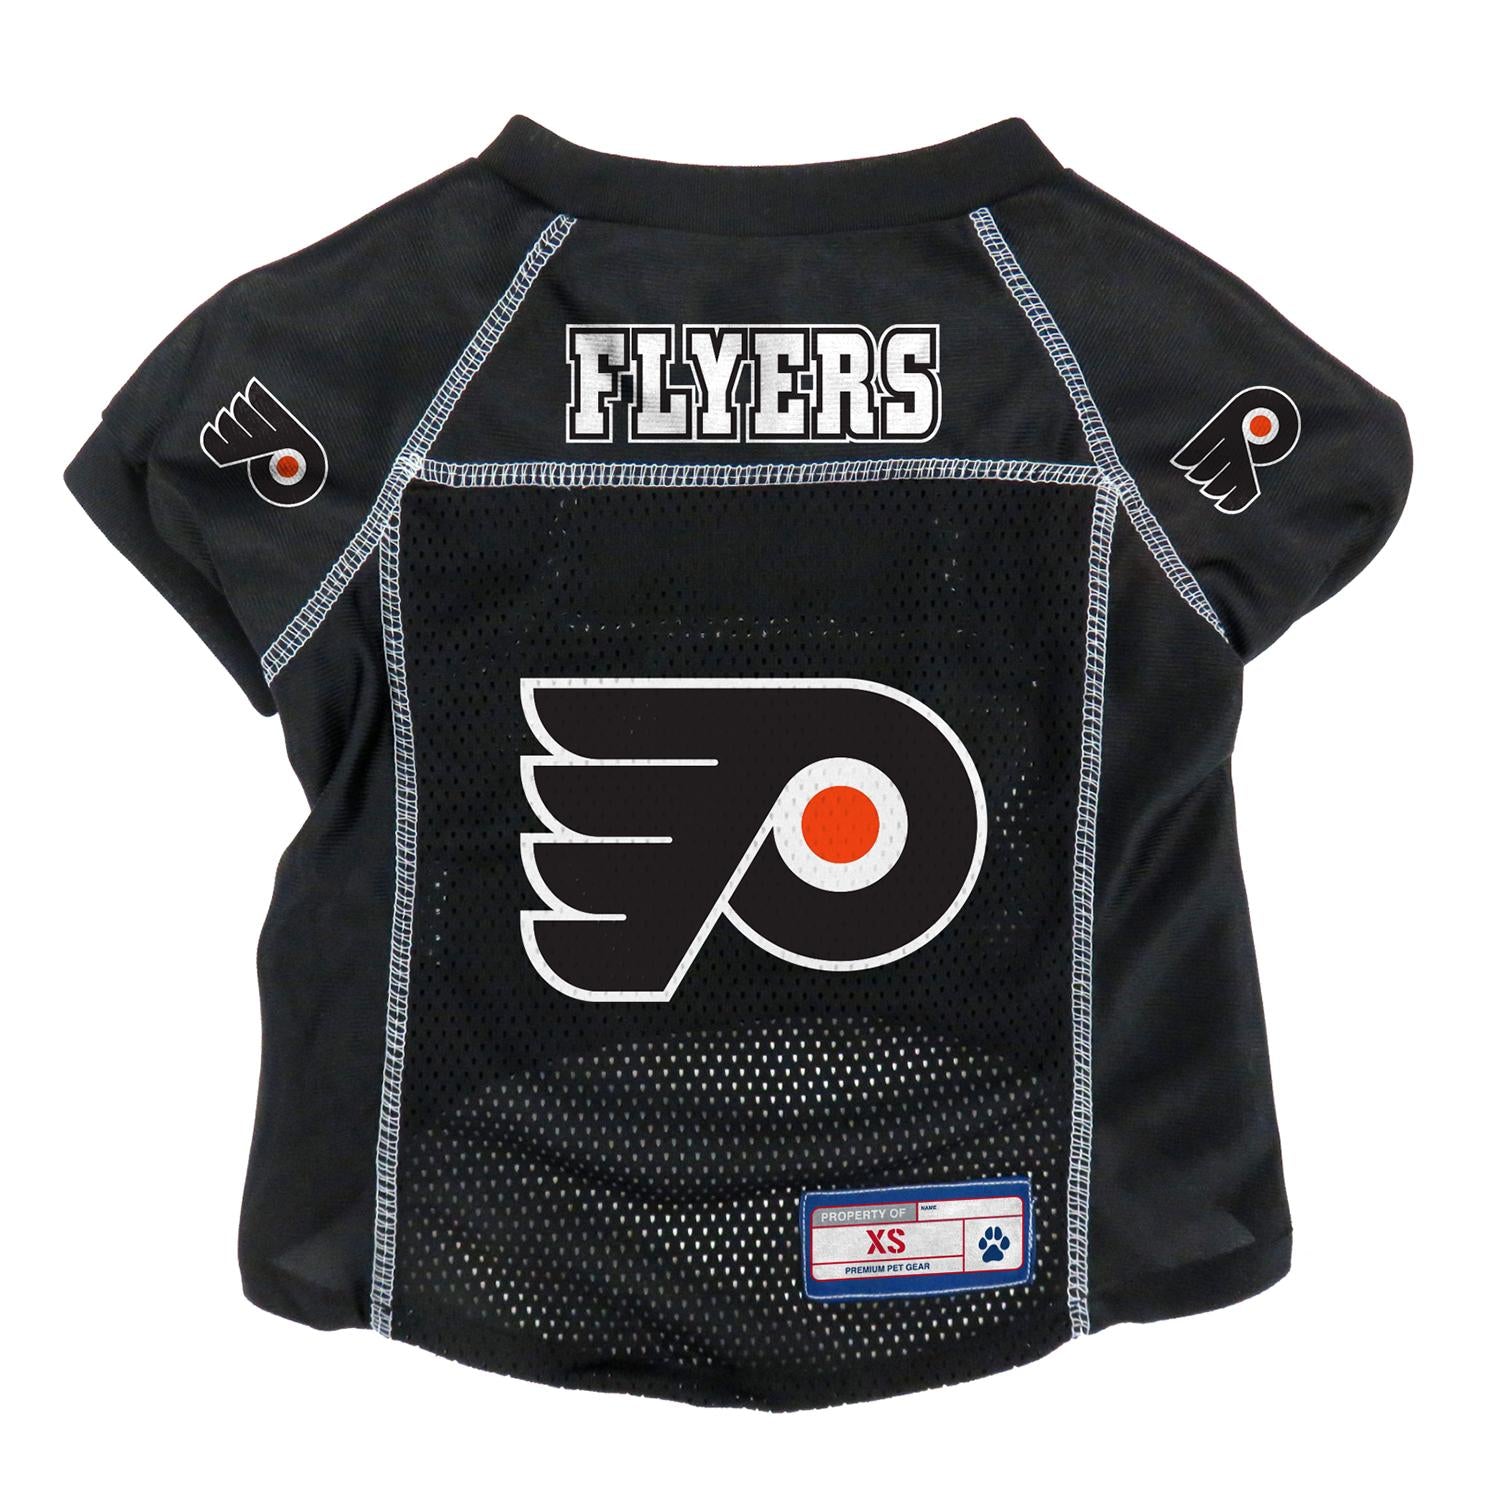 Philadelphia Flyers Pet Gear, Flyers Collars, Chew Toys, Pet Carriers